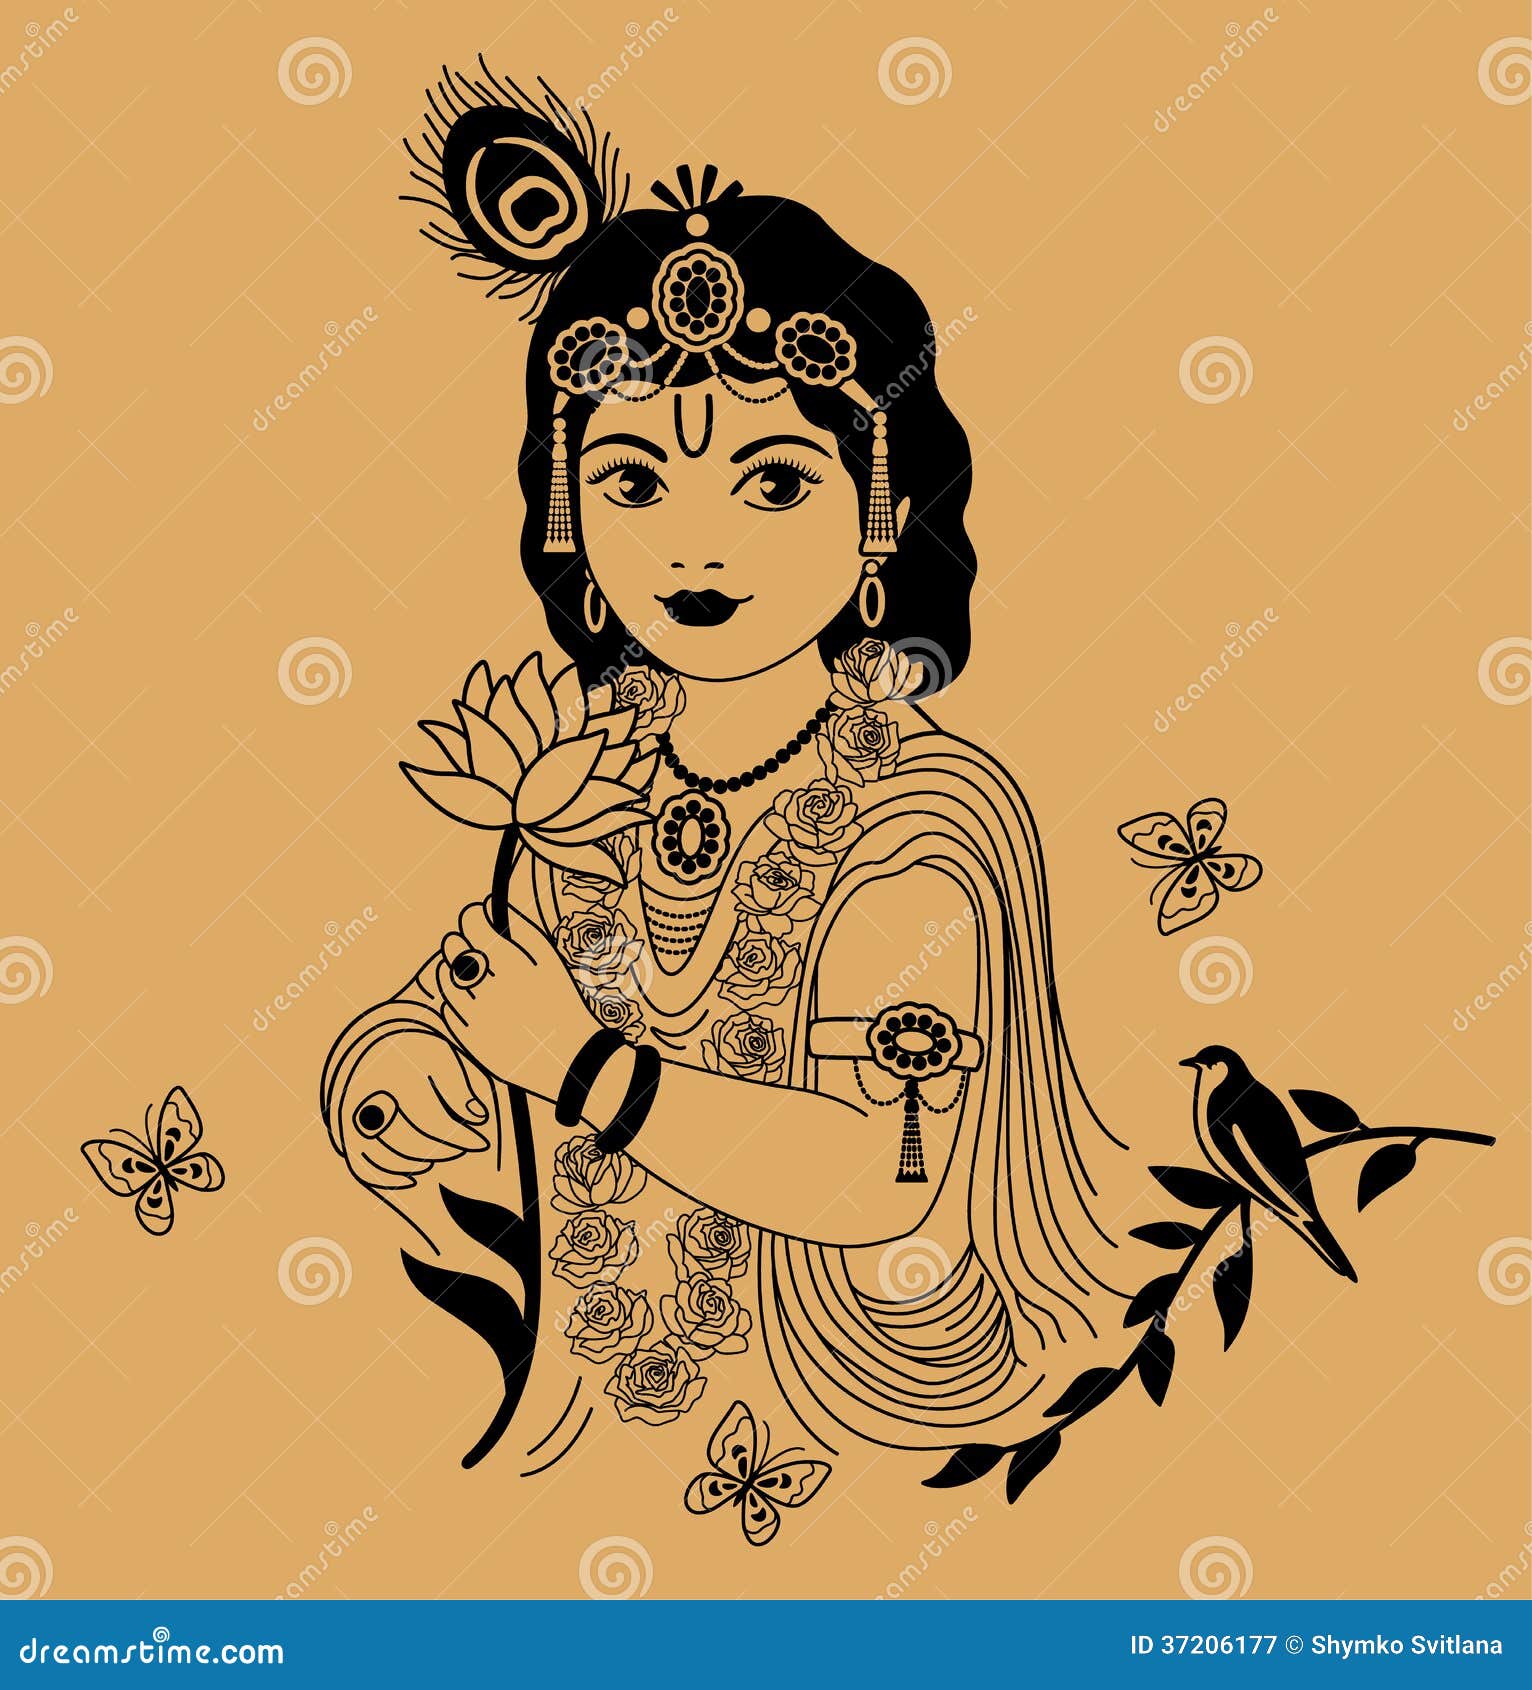 Little Krishna stock vector. Illustration of peacock - 37206177